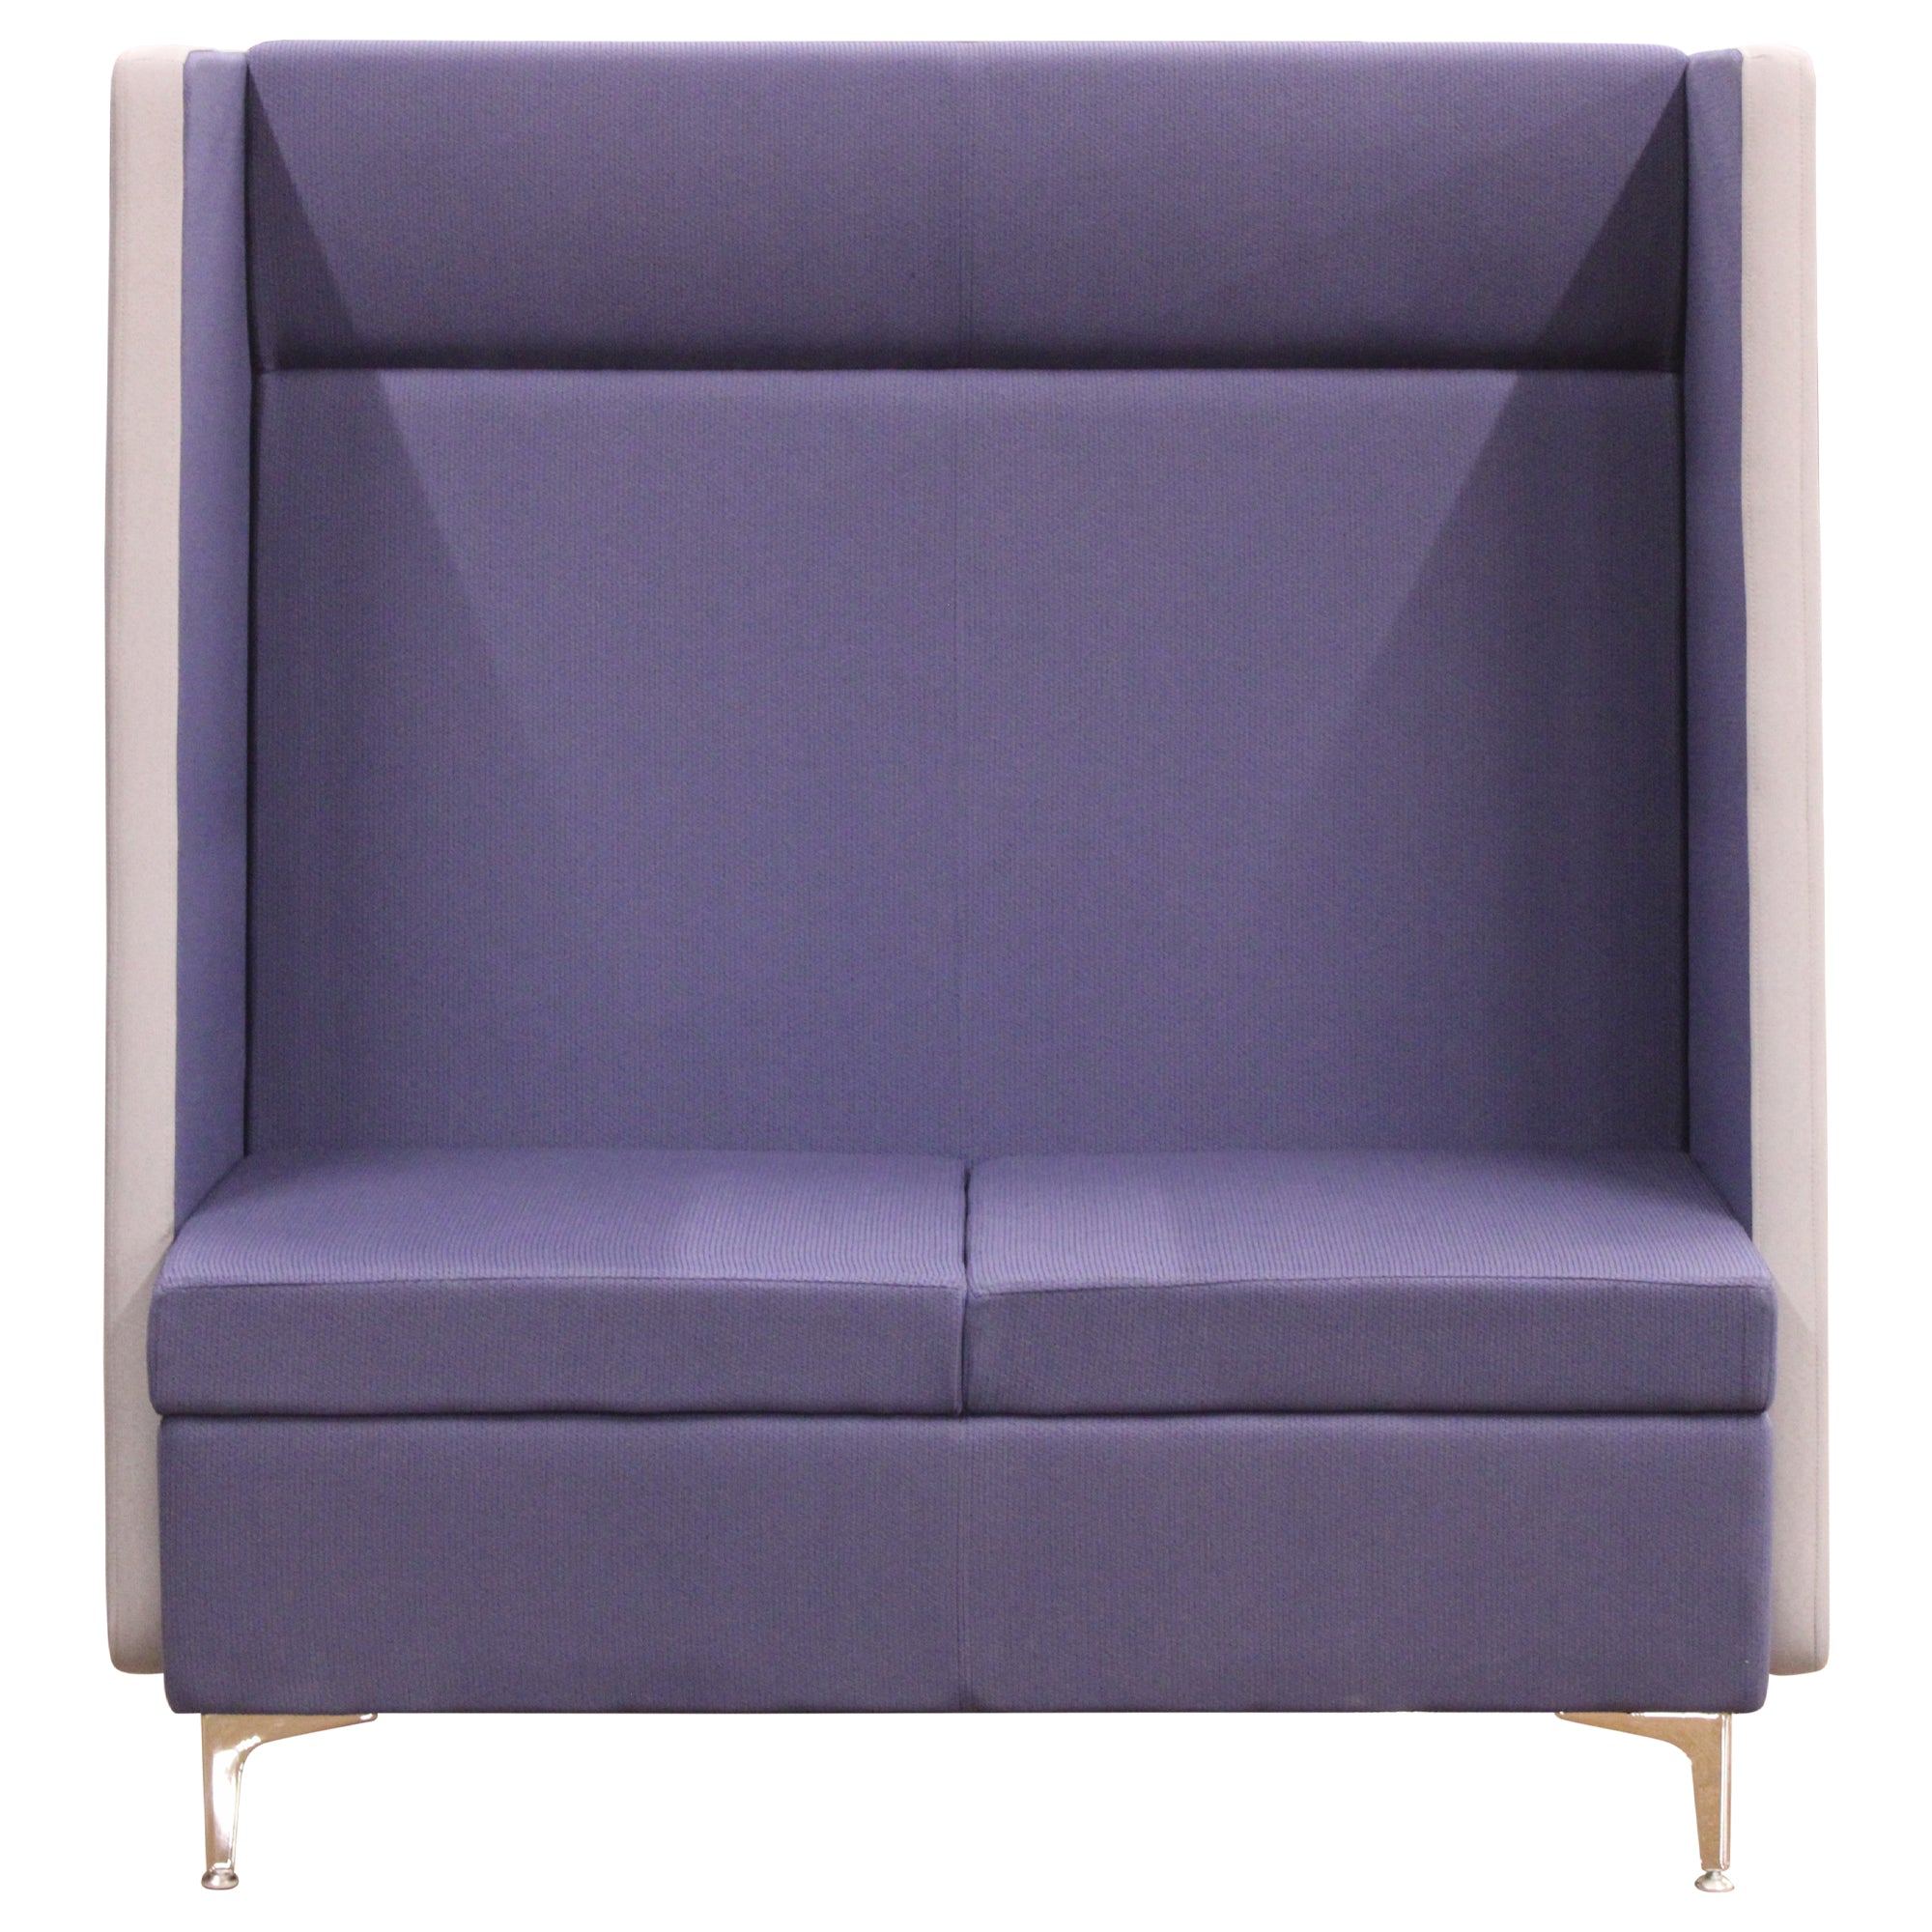 Kimball Villa 2-Seat Lounge w/Semi-Private Shade, Blue Seat - Preowned